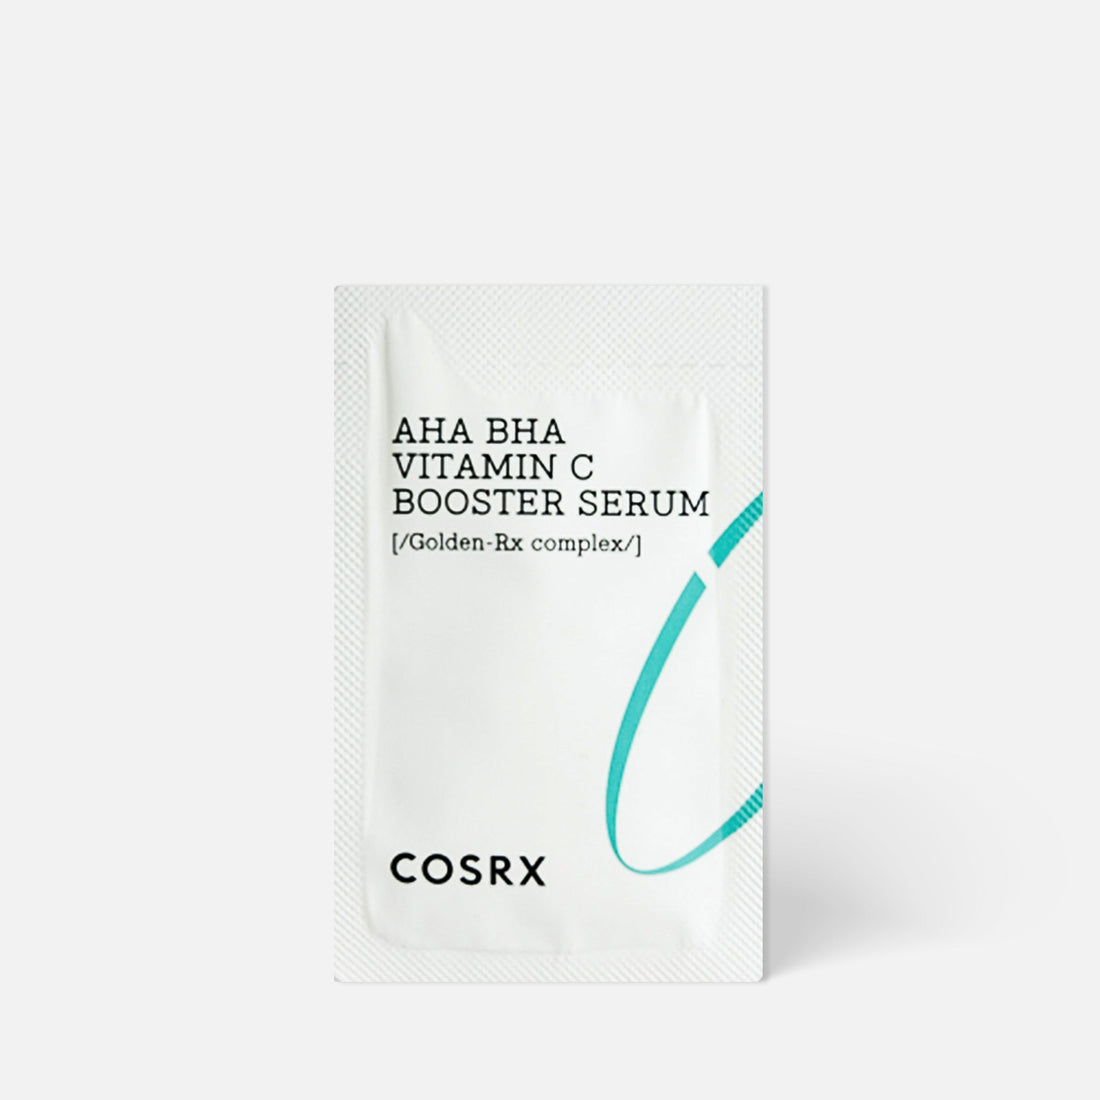 COSRX AHA BHA Booster Serum 1.5ml Sample